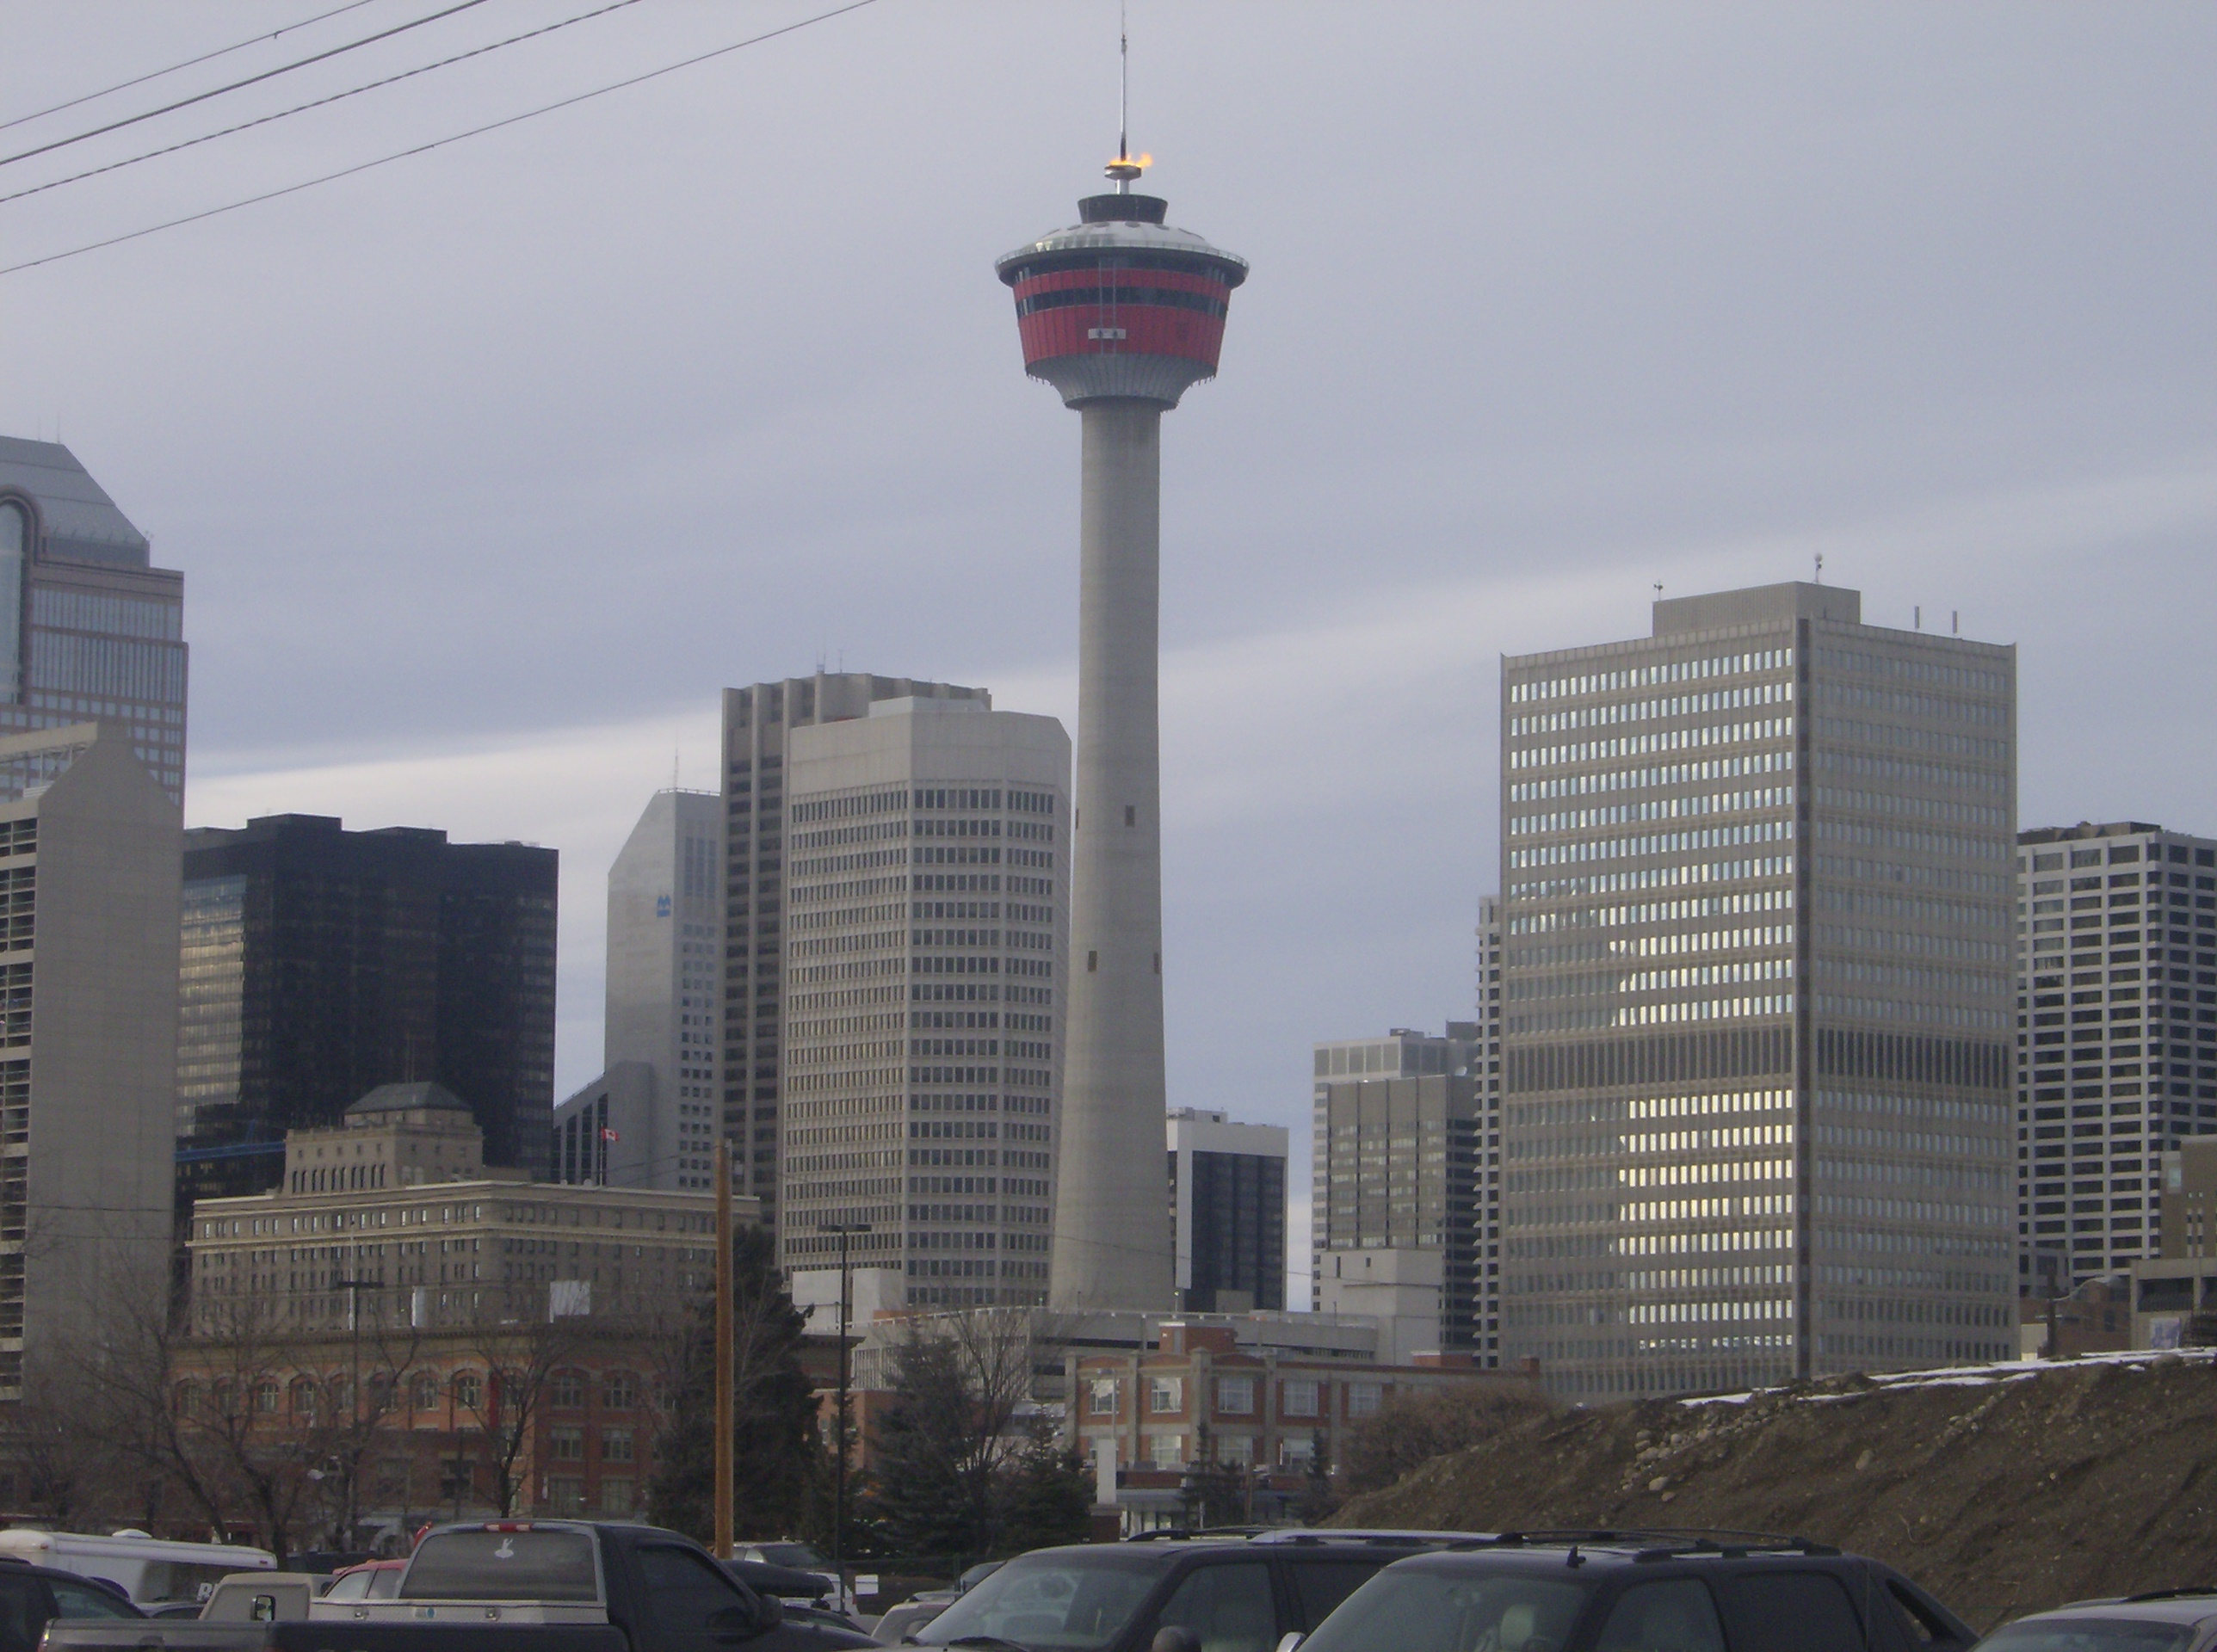 Calgary_Tower_with_flame_1.jpg